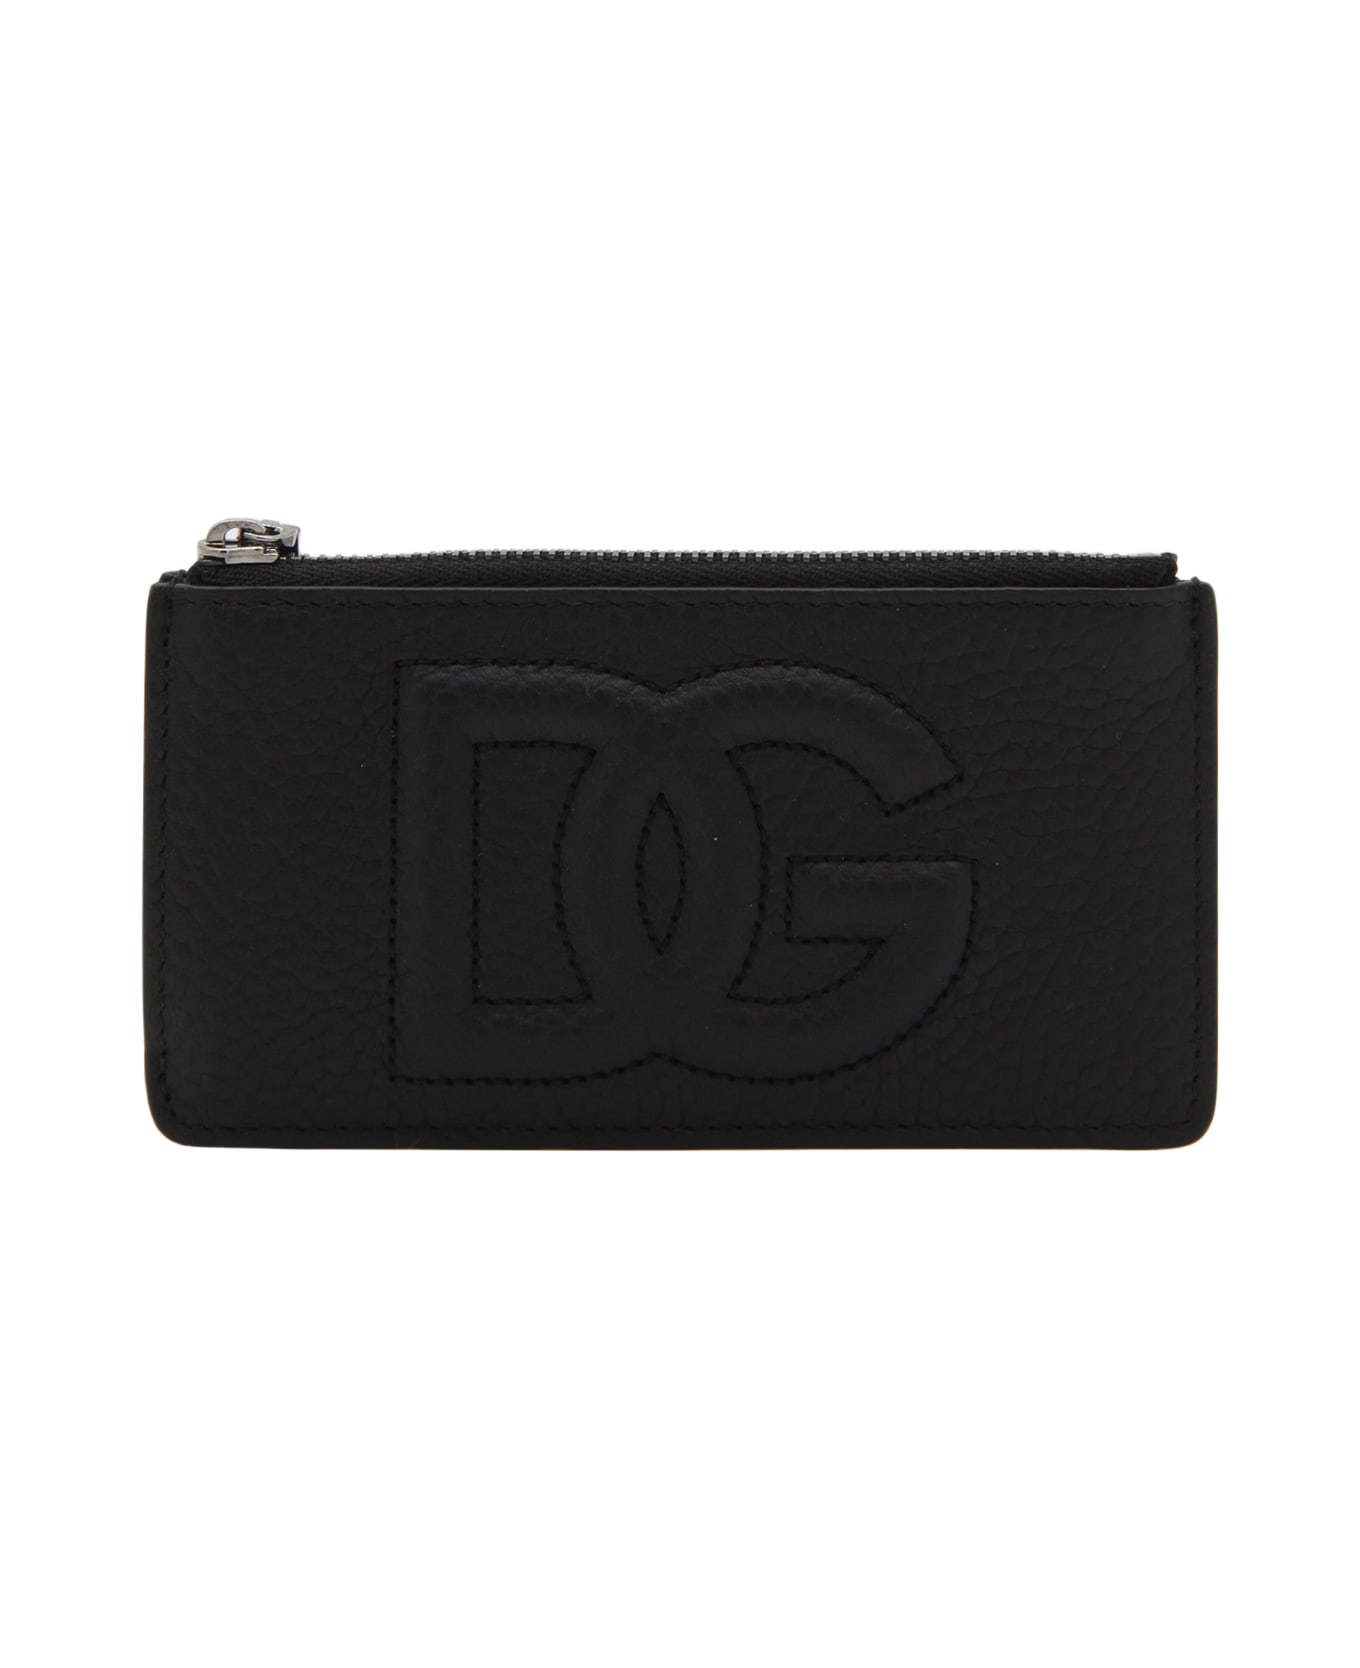 Dolce & Gabbana Black Calf Leather Cardholder - Black